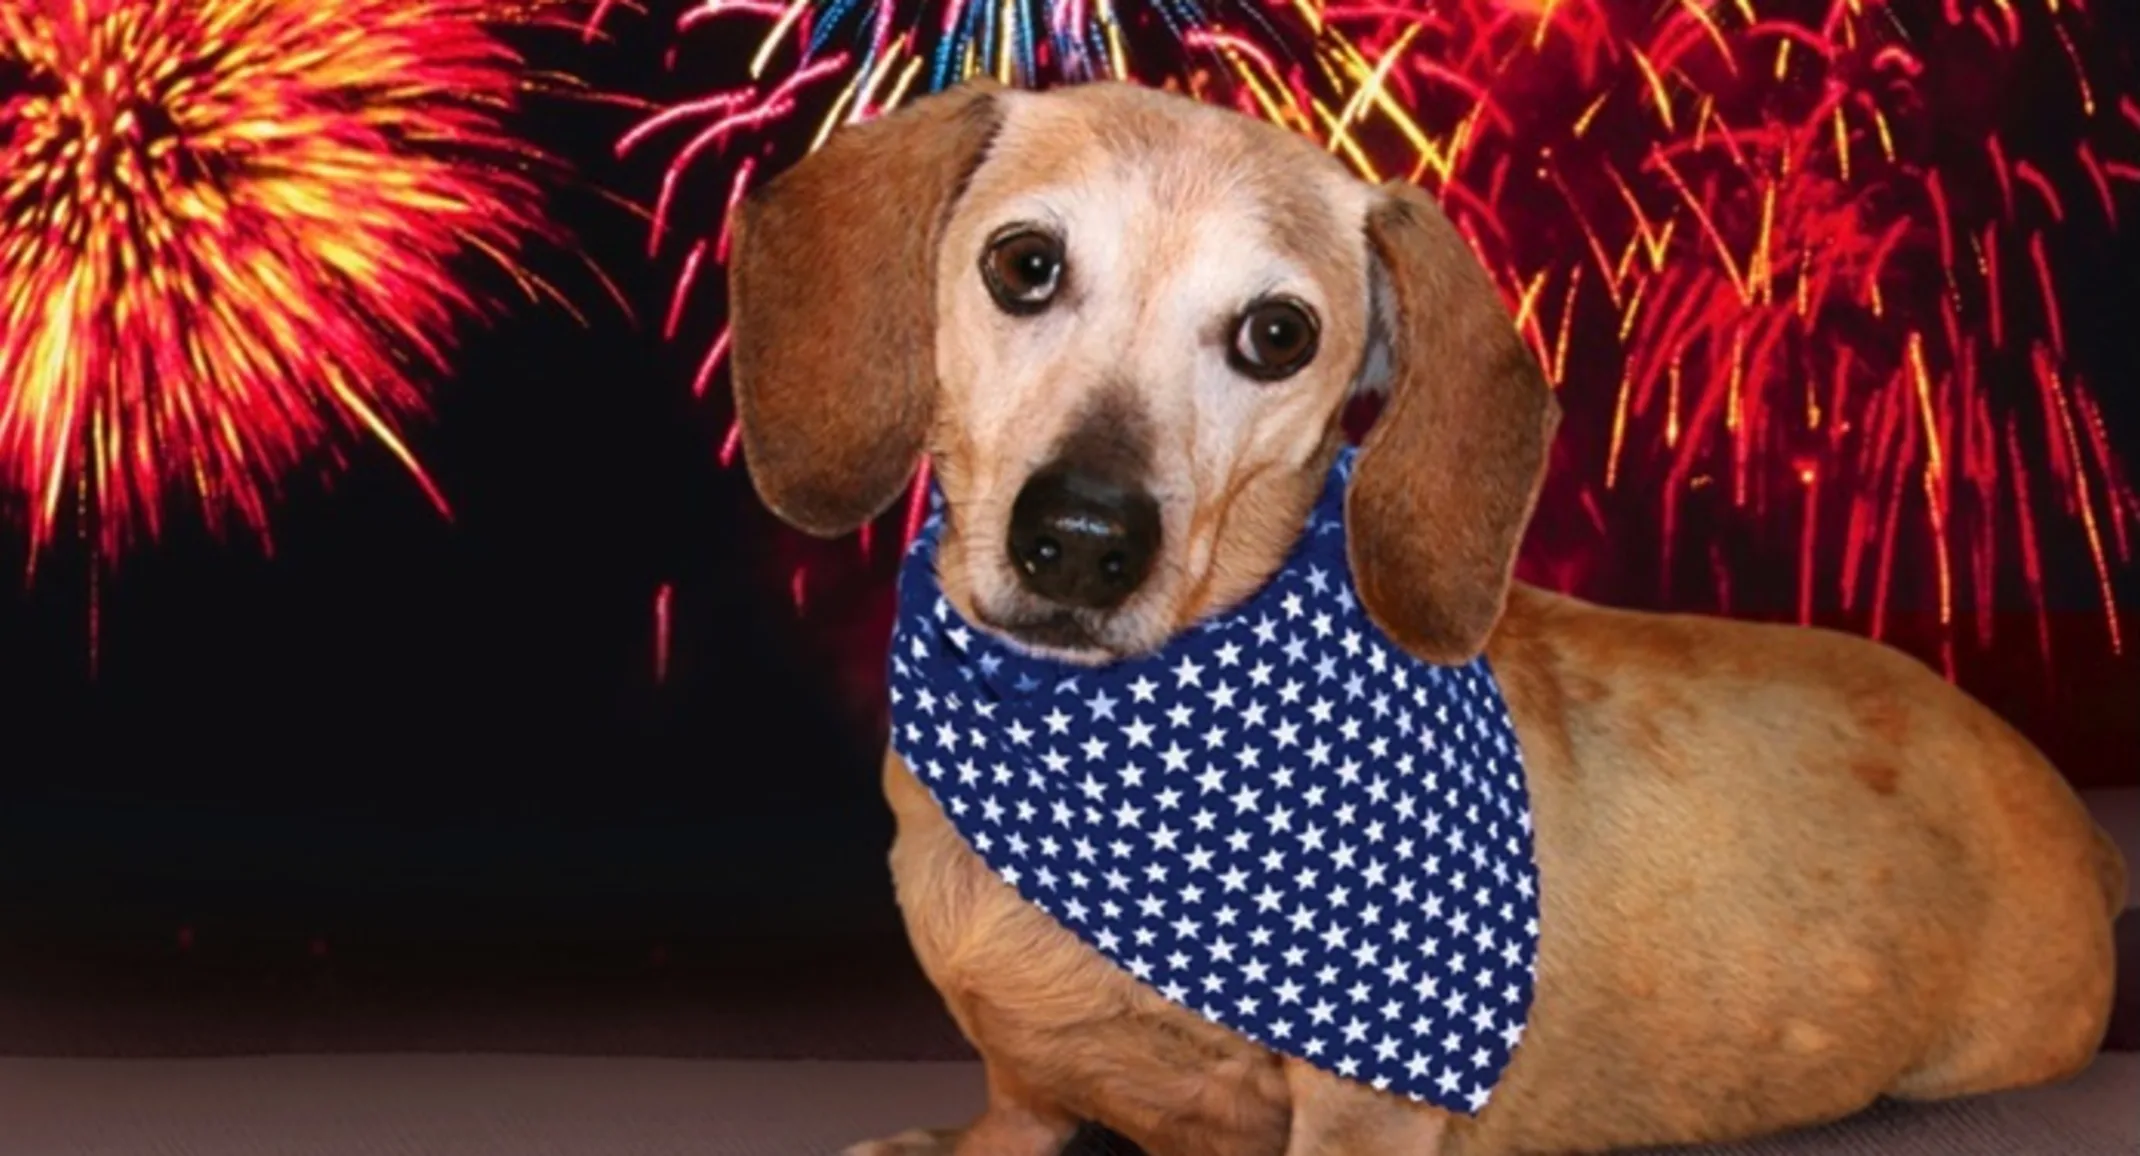 Small dog wearing bandana with fireworks backdrop